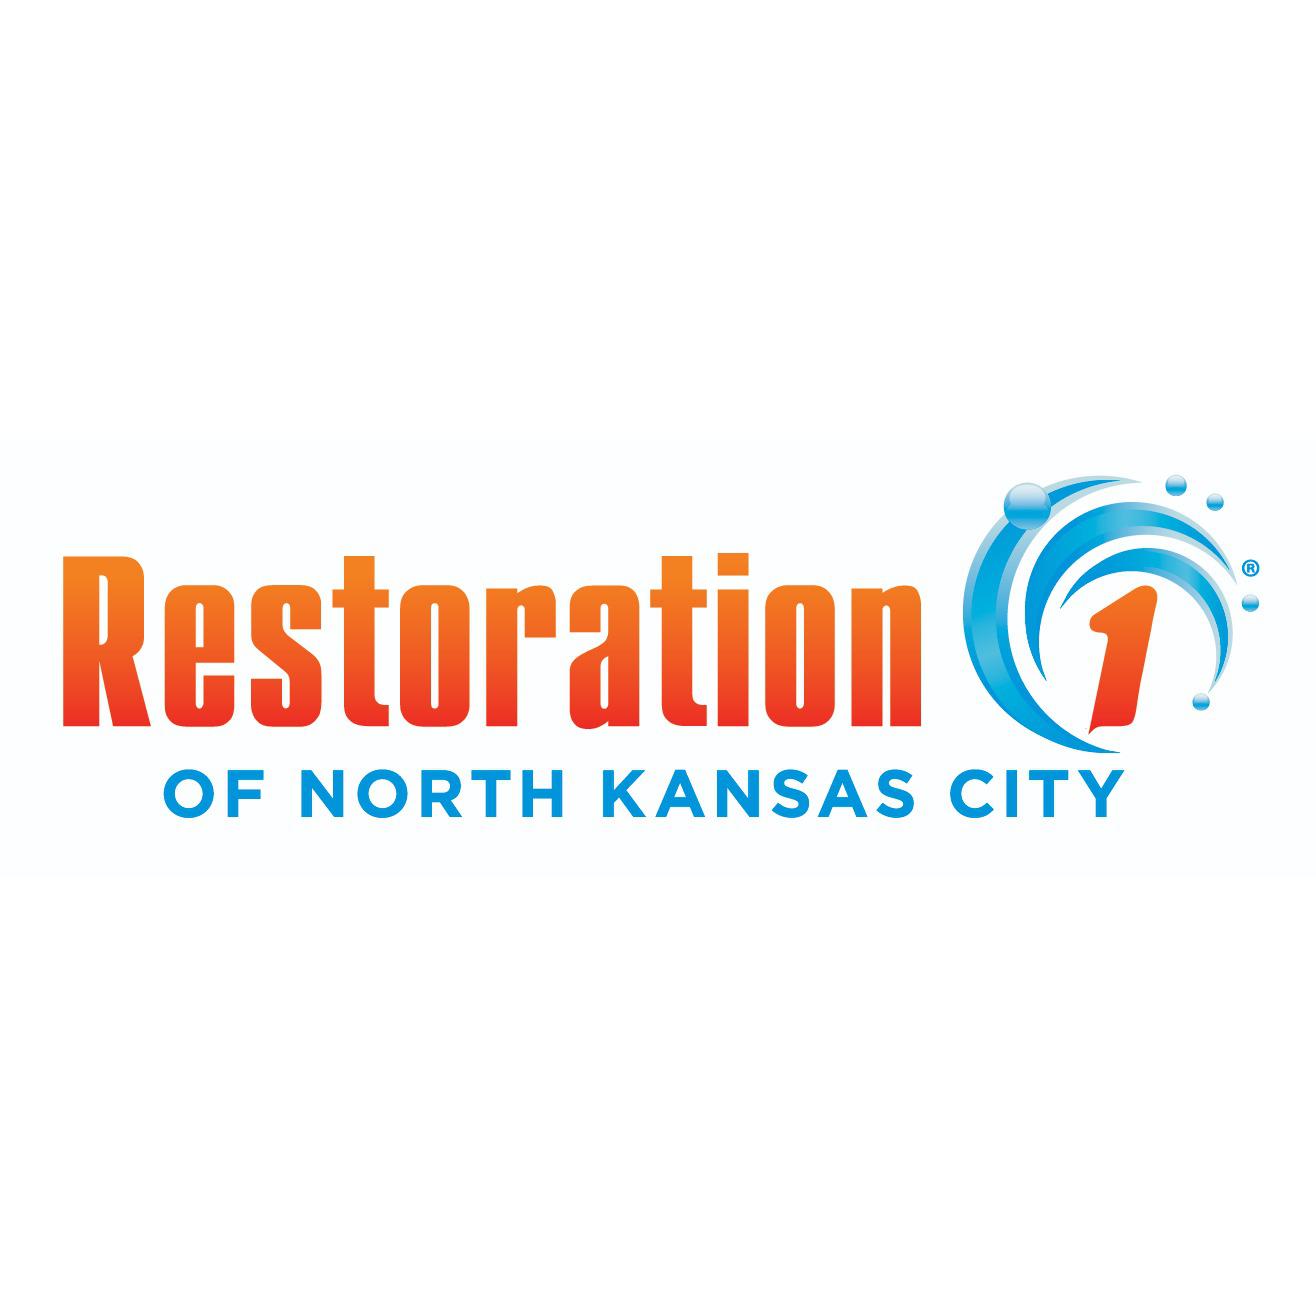 Restoration 1 of North Kansas City